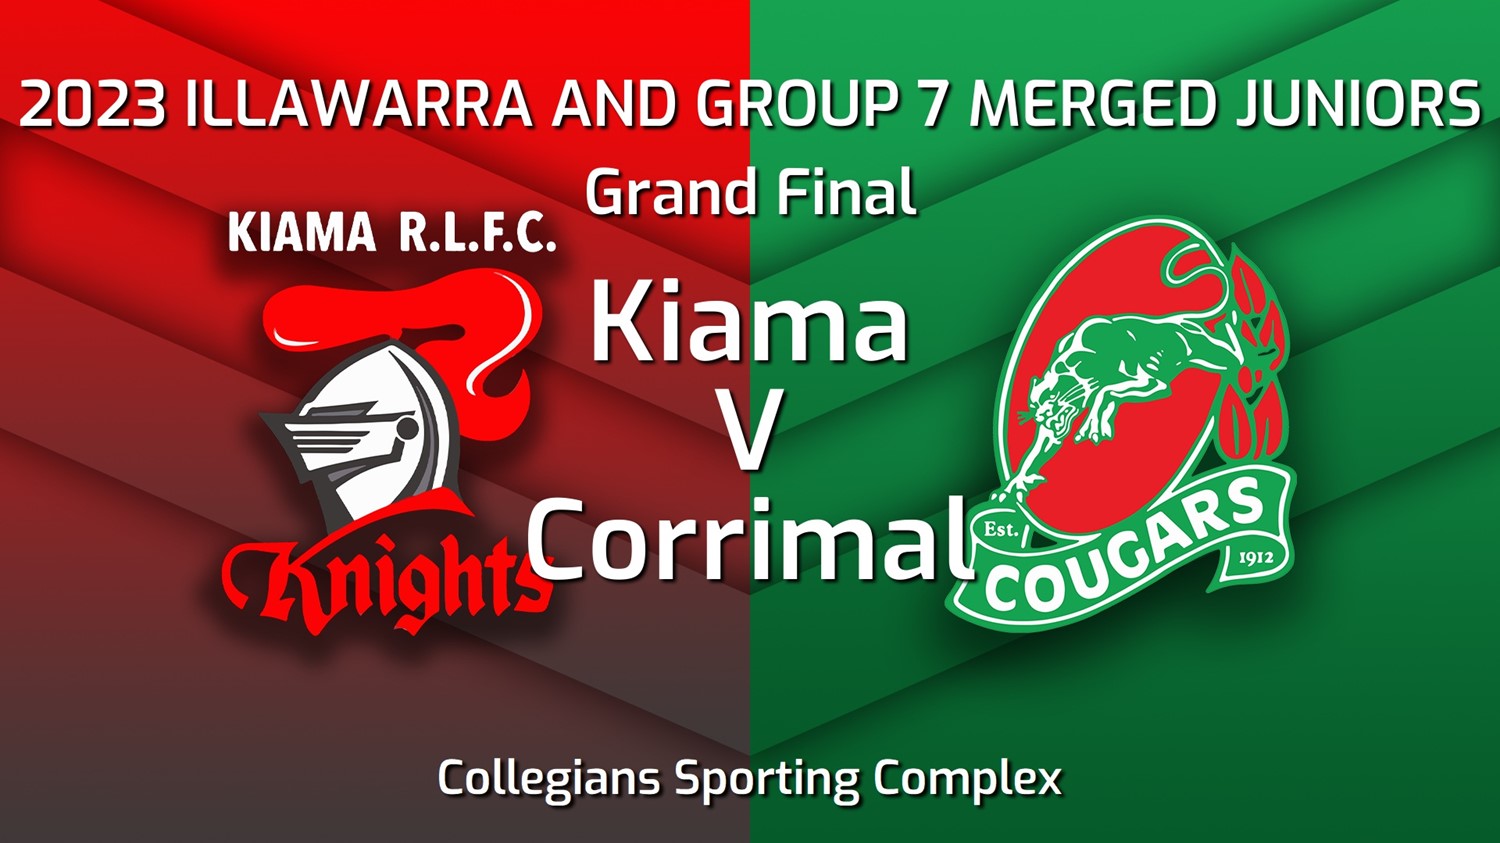 230901-Illawarra and Group 7 Merged Juniors Grand Final - U16 Girls - Kiama Knights v Corrimal Cougars Slate Image